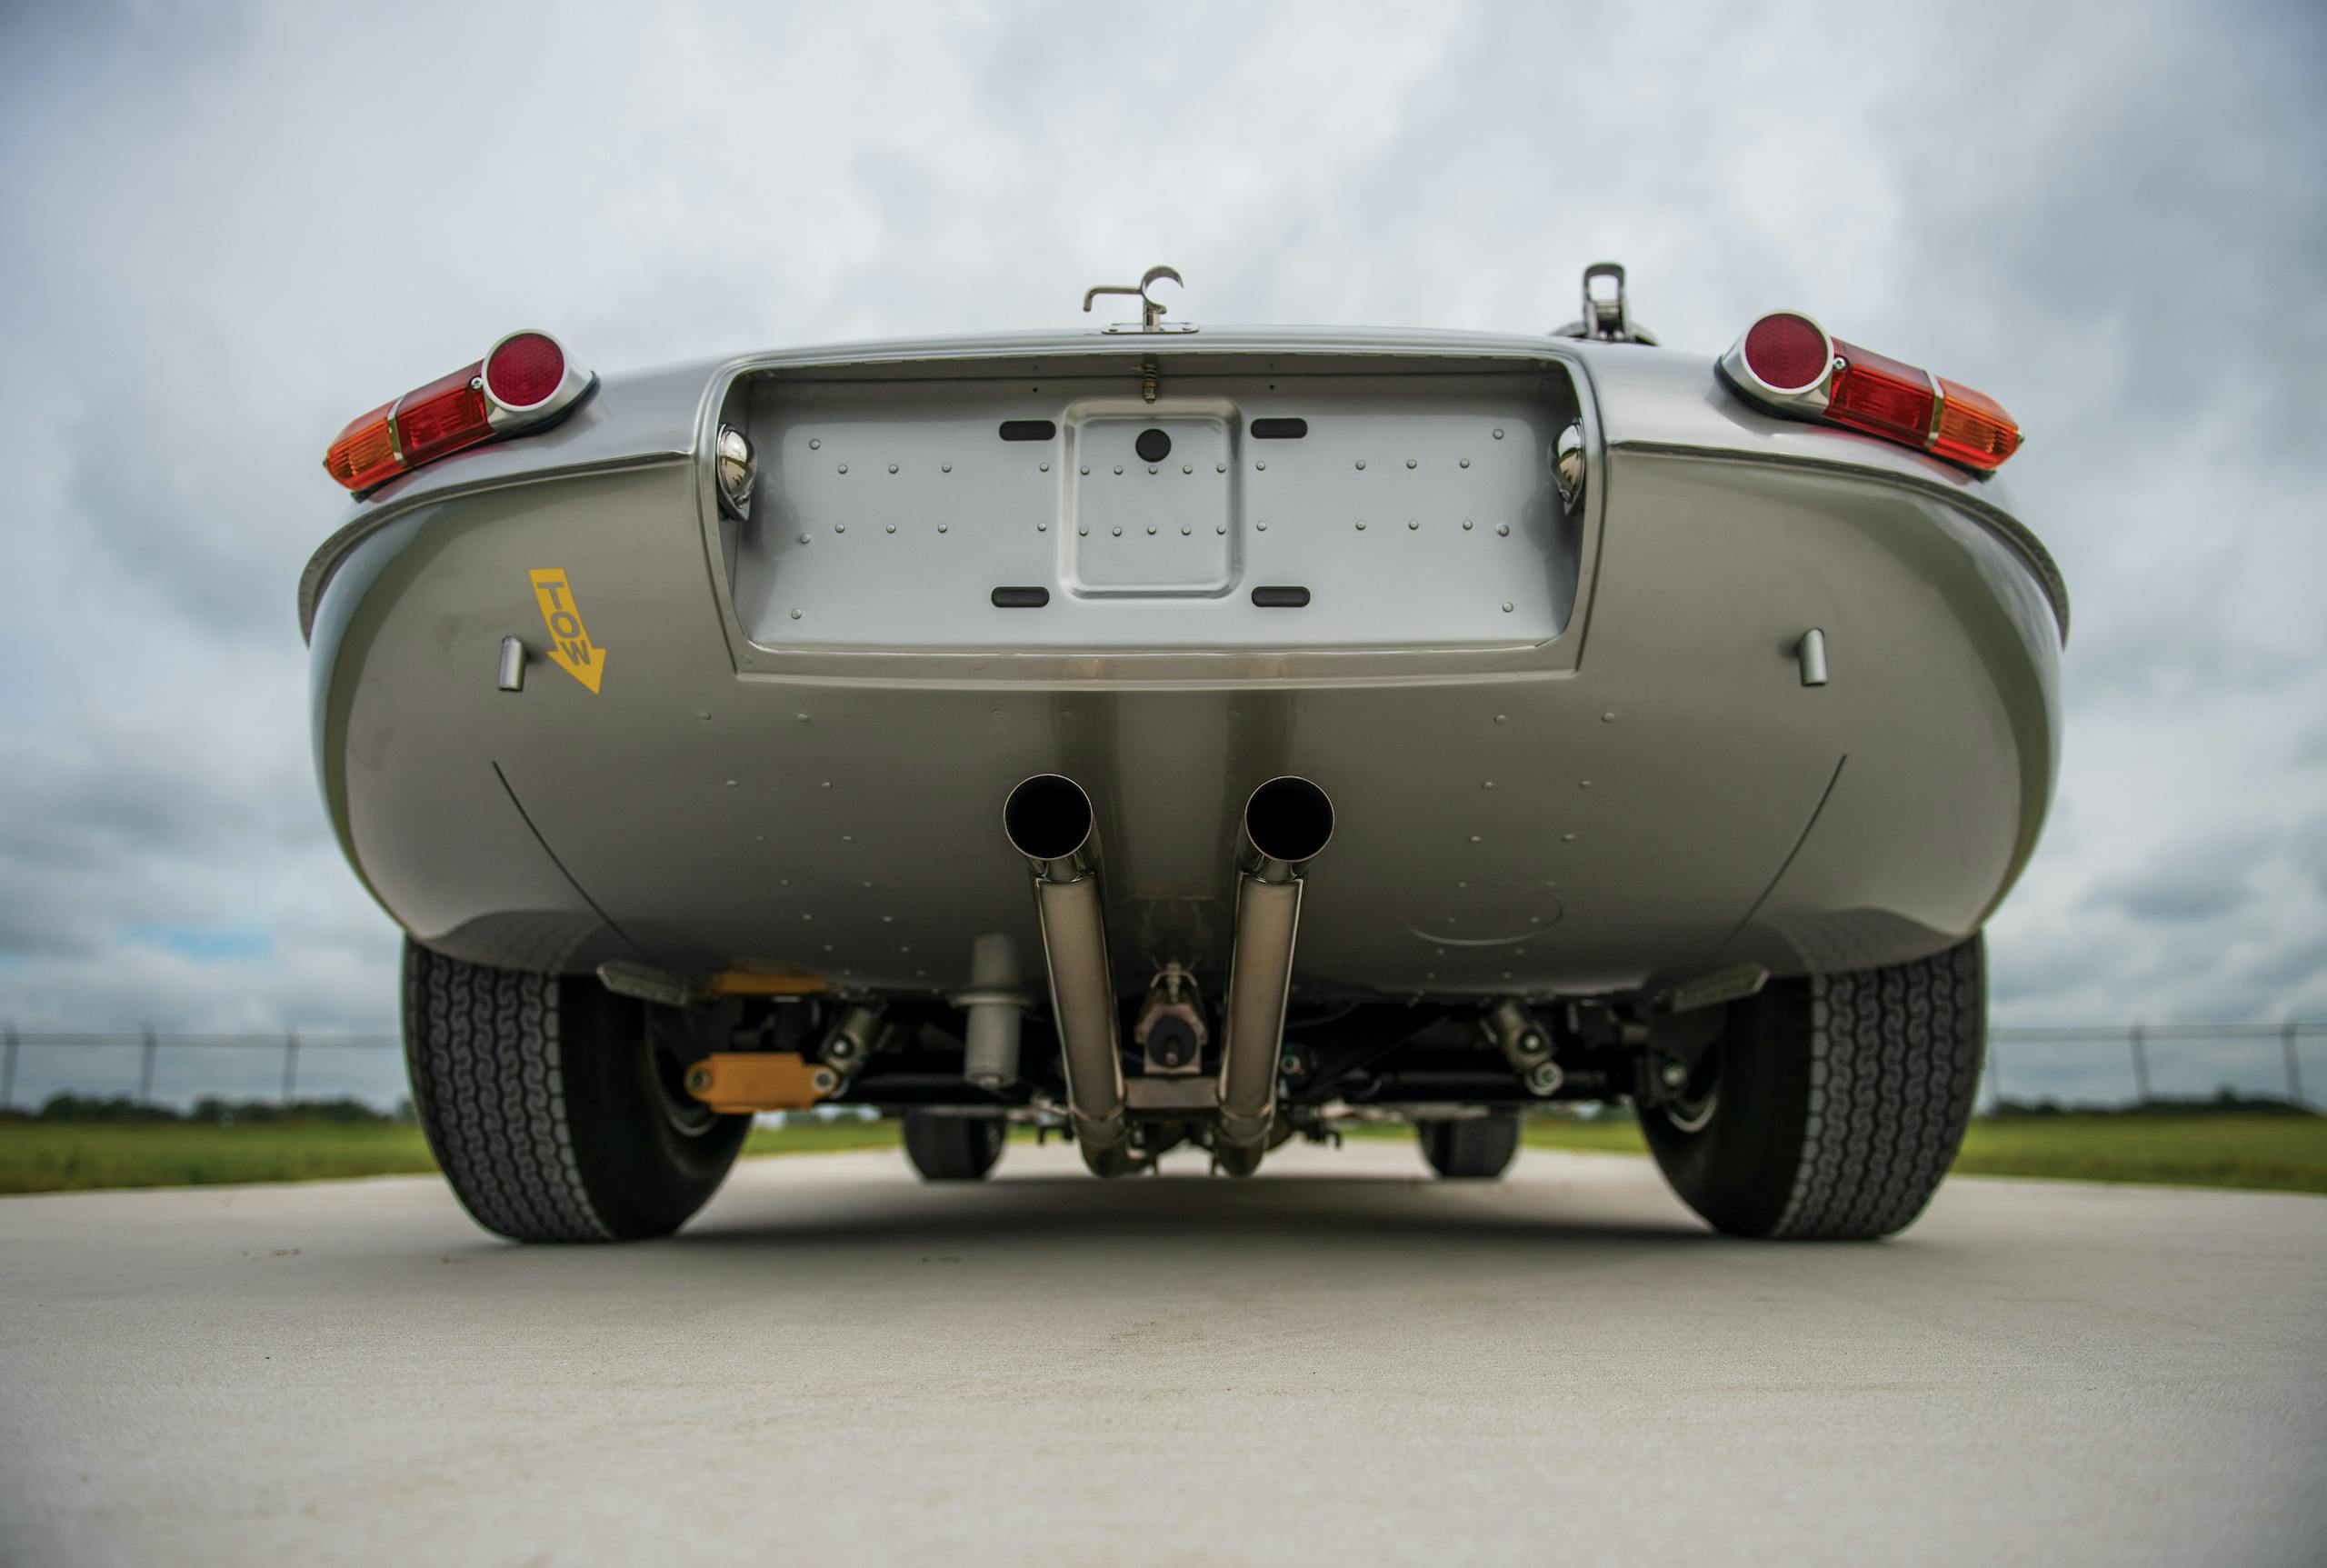 1963 Jag E Type rear underside pipes